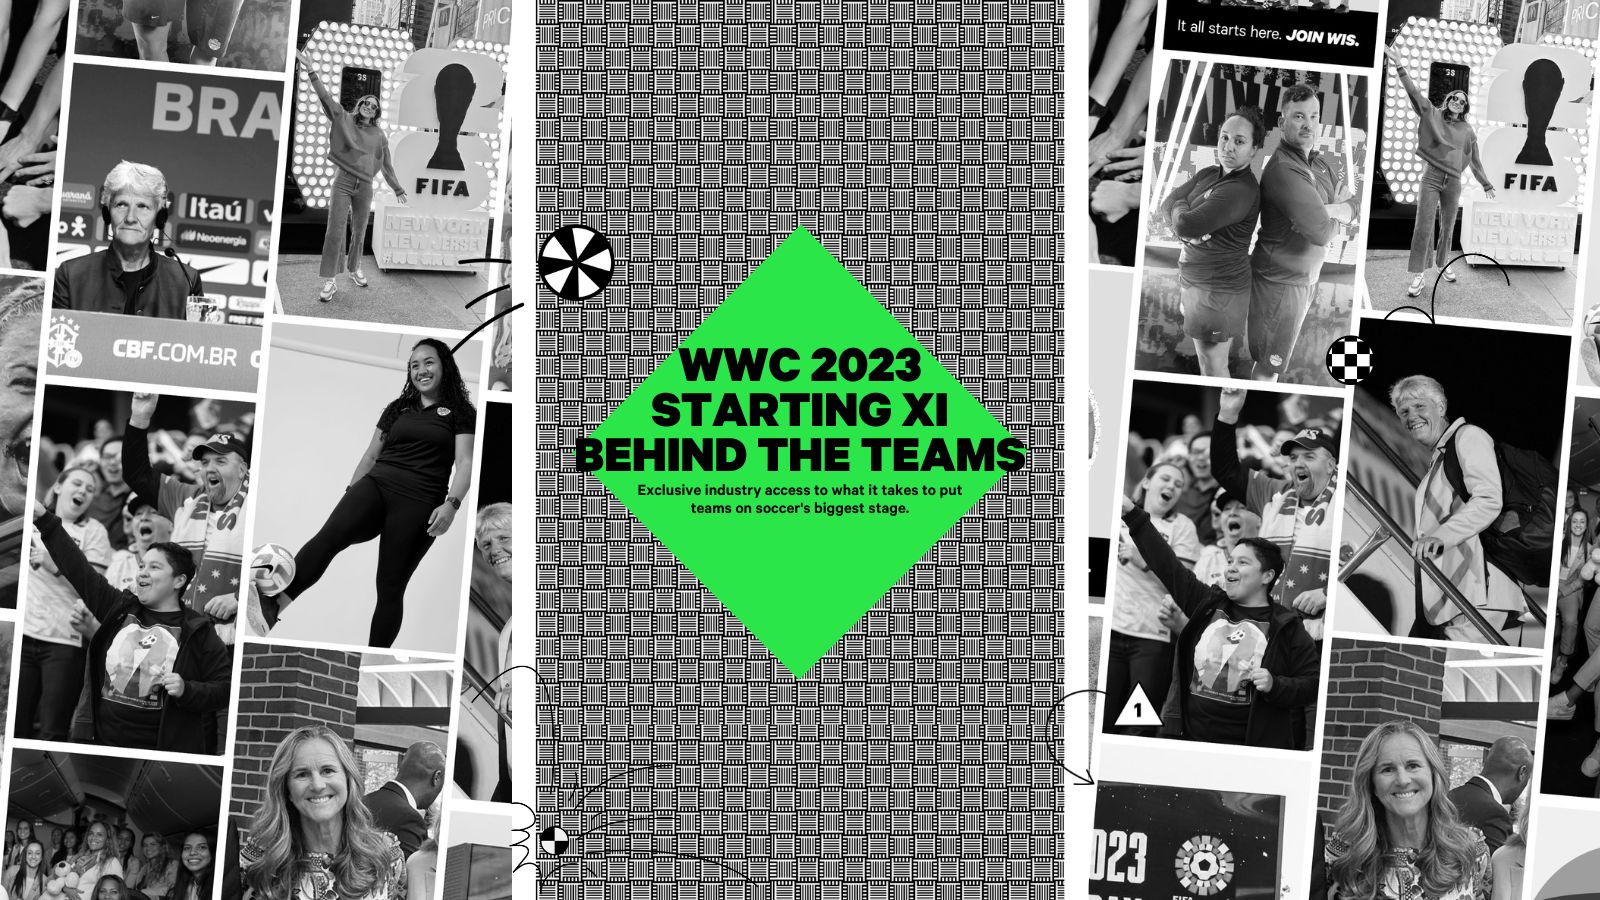 WWC 2023 STARTING XI BEHIND THE TEAMS